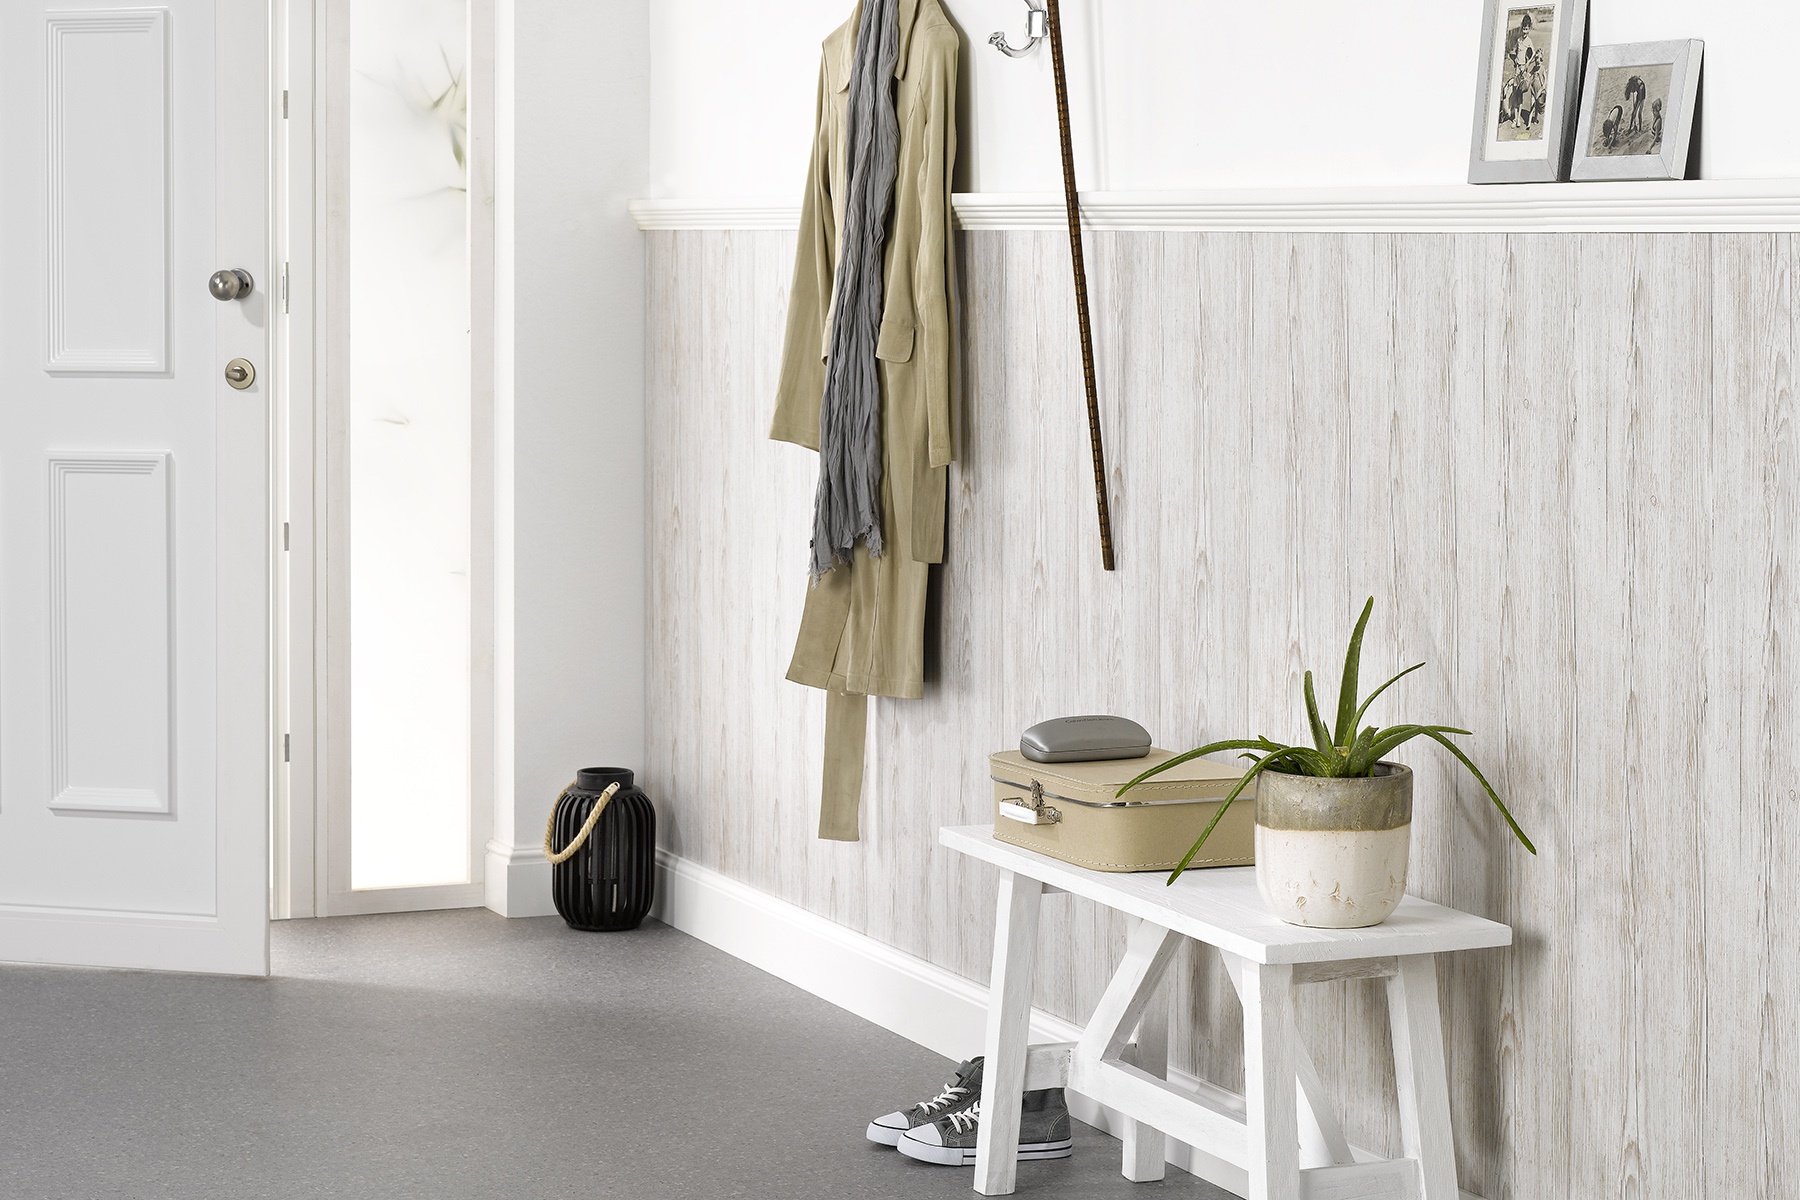 Discipline Bijlage Mantel Waterbestendige wandpanelen en plafondpanelen – watervaste wanden en  plafonds voor badkamers en keukens | Dumapan | Dumaplast